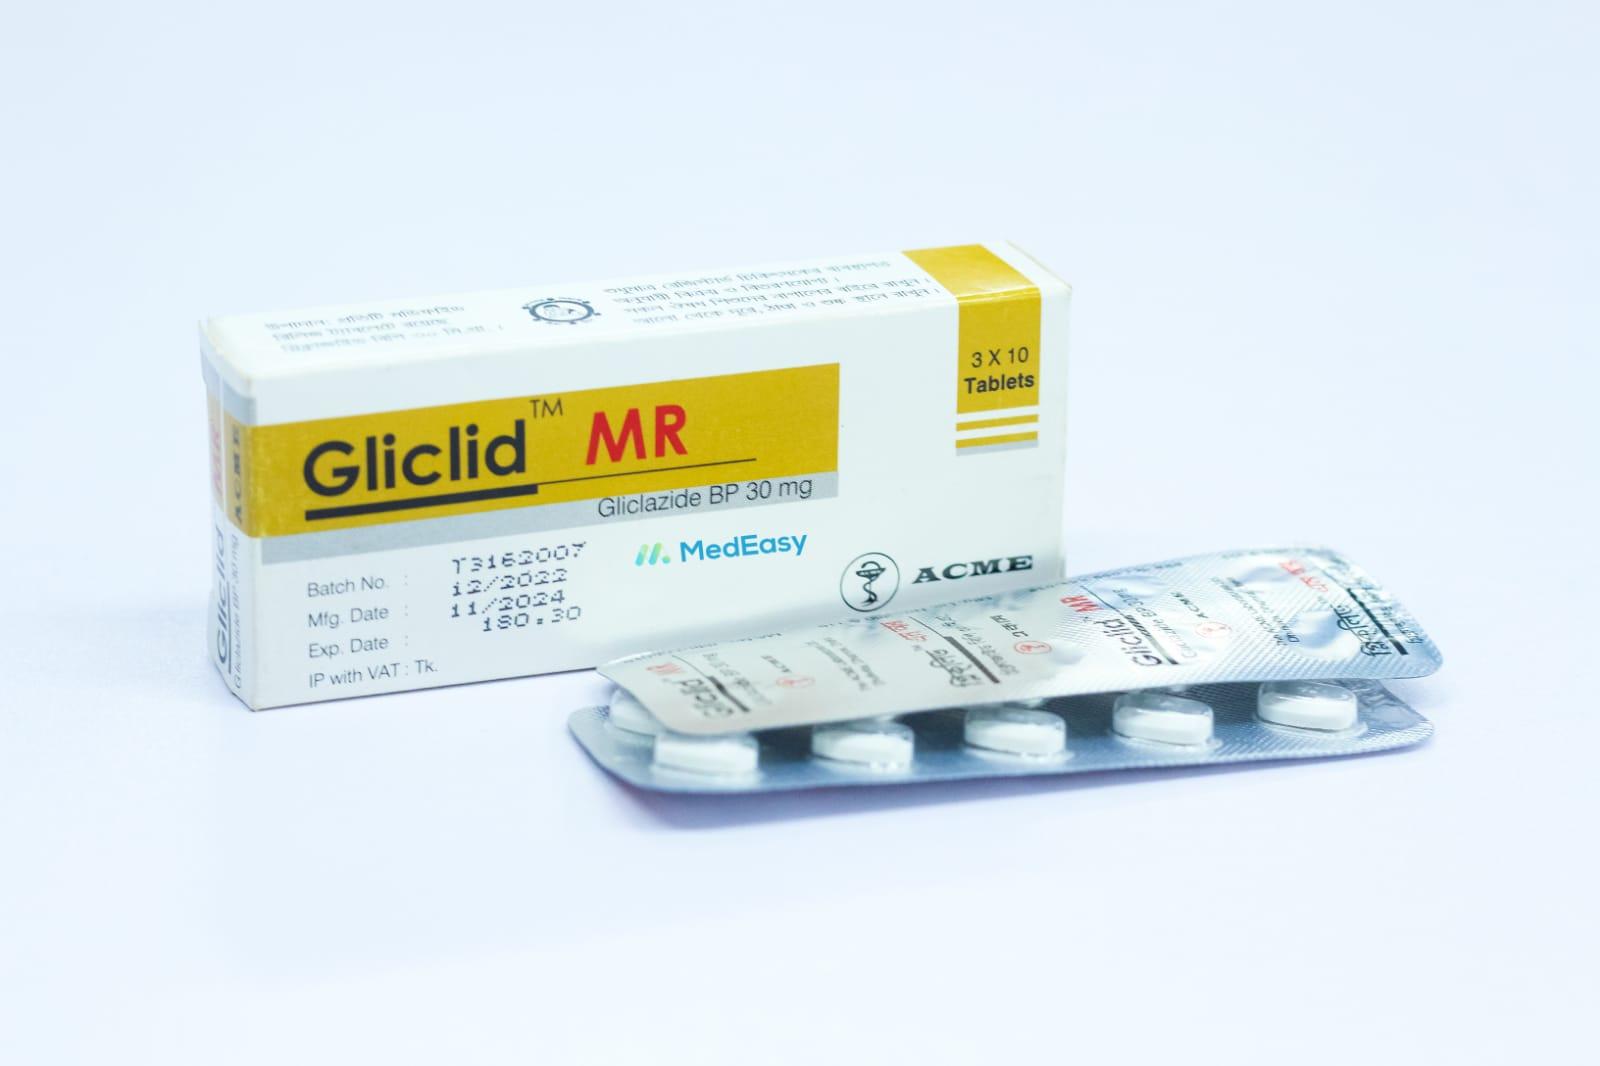 Gliclid MR